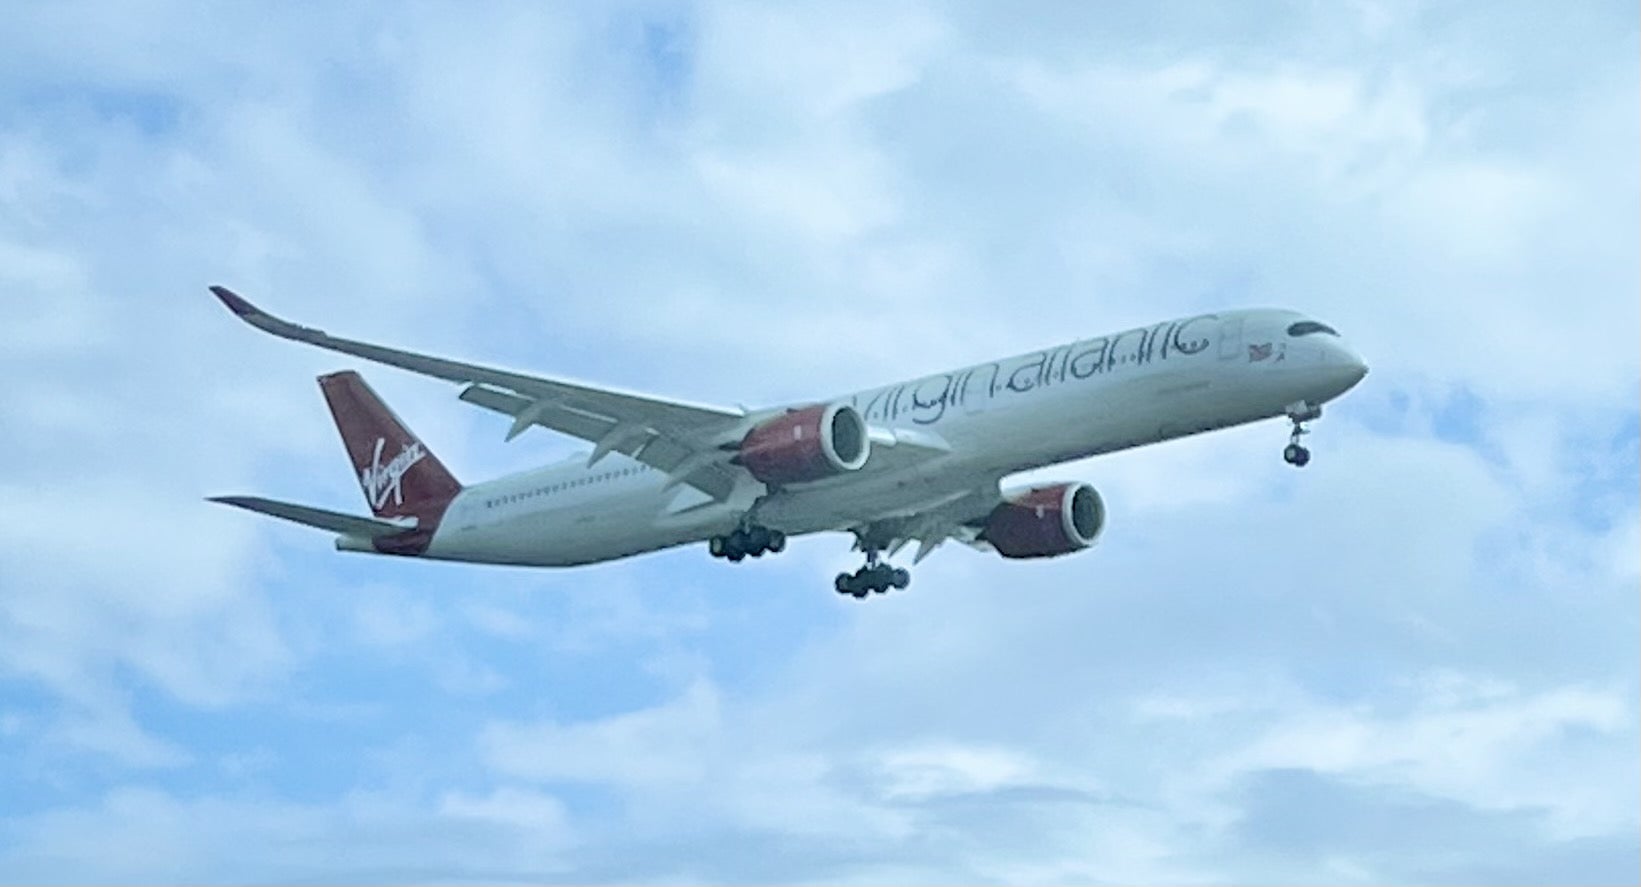 A Virgin Atlantic Airbus A350 on short finals into London Heathrow (LHR)